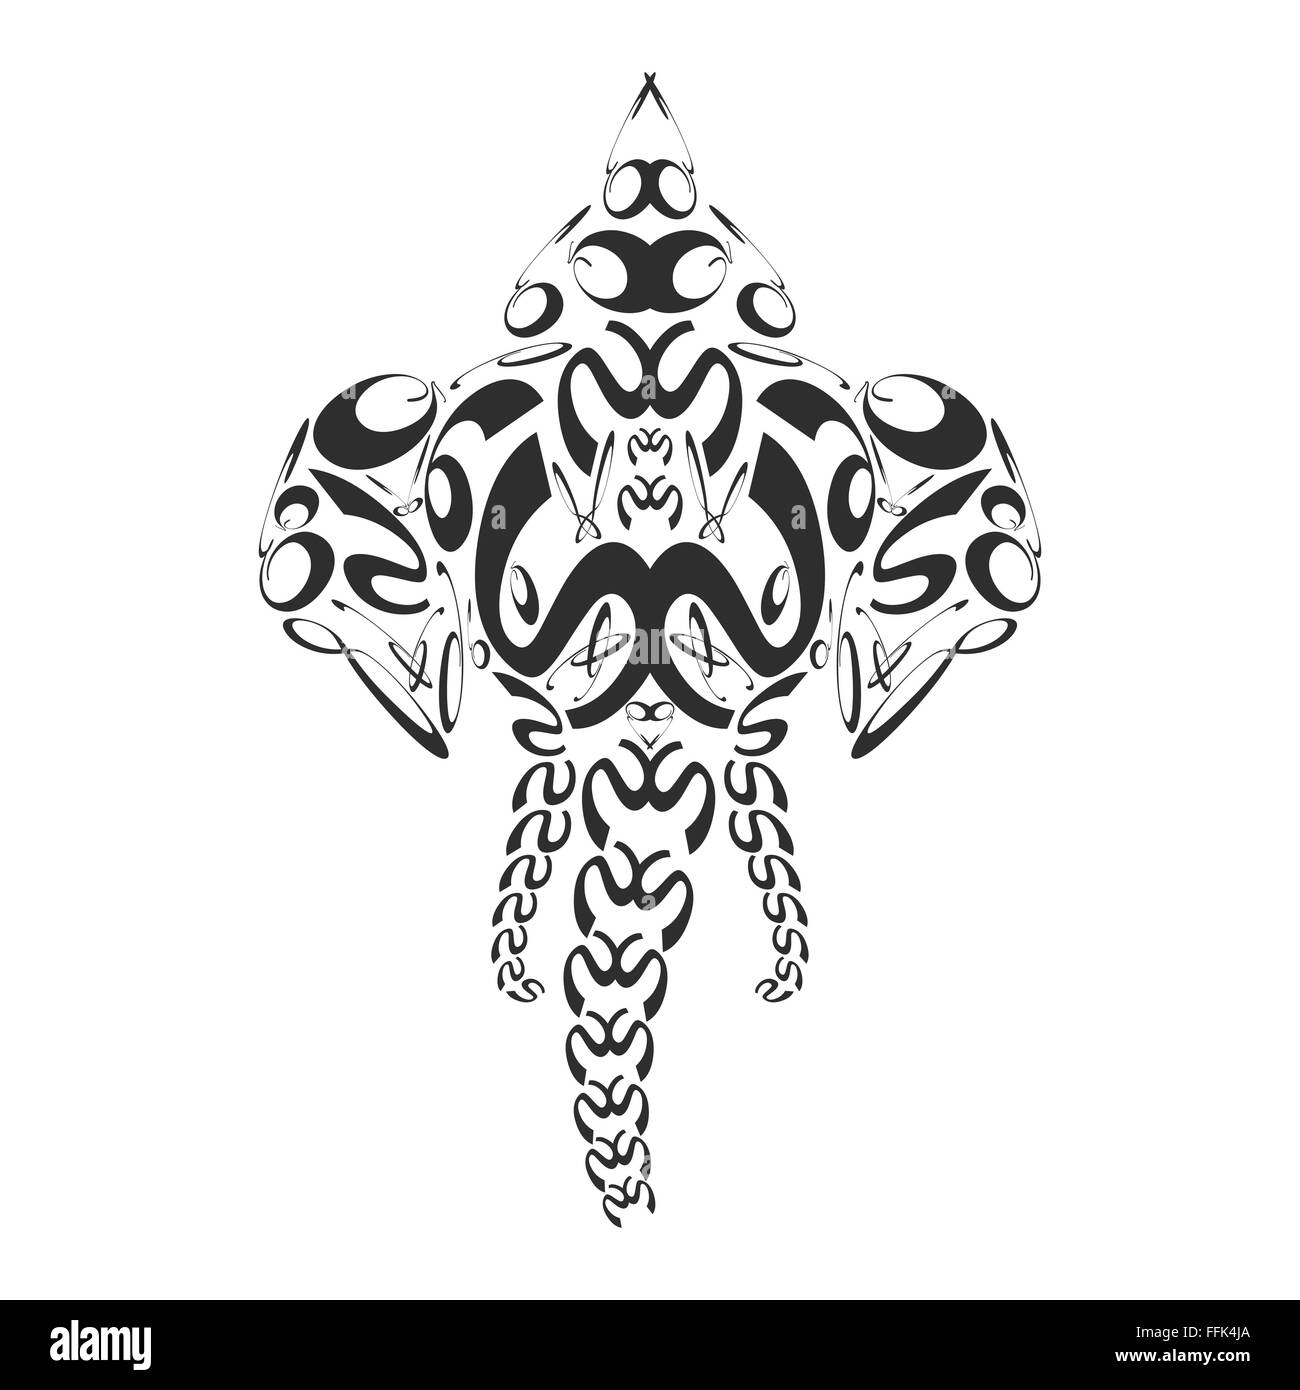 vector black monochrome abstract signs elephant head ganesh art ...